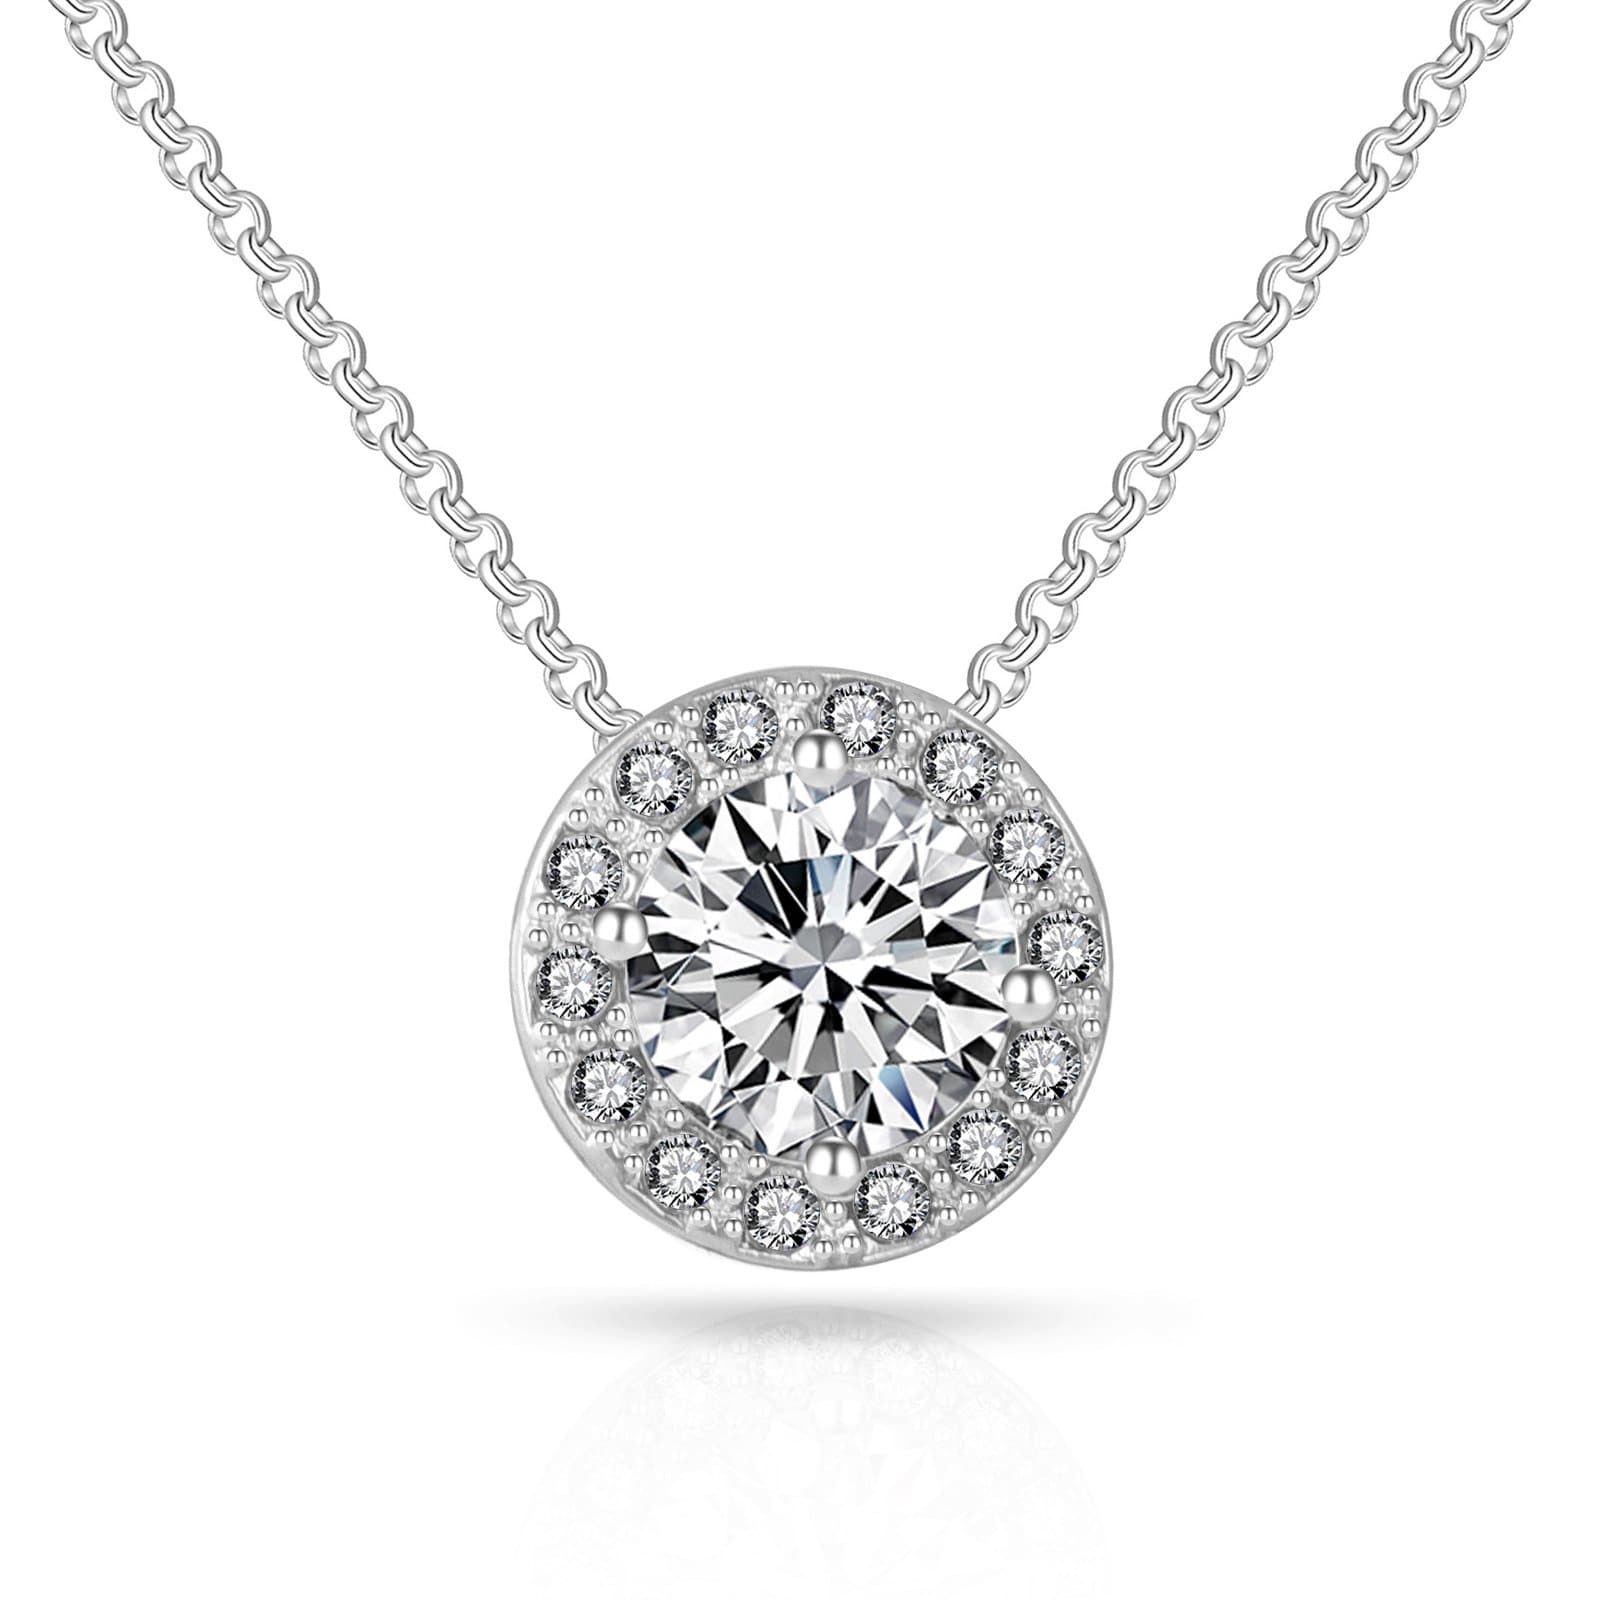 Halo Necklace Created with Zircondia® Crystals by Philip Jones Jewellery